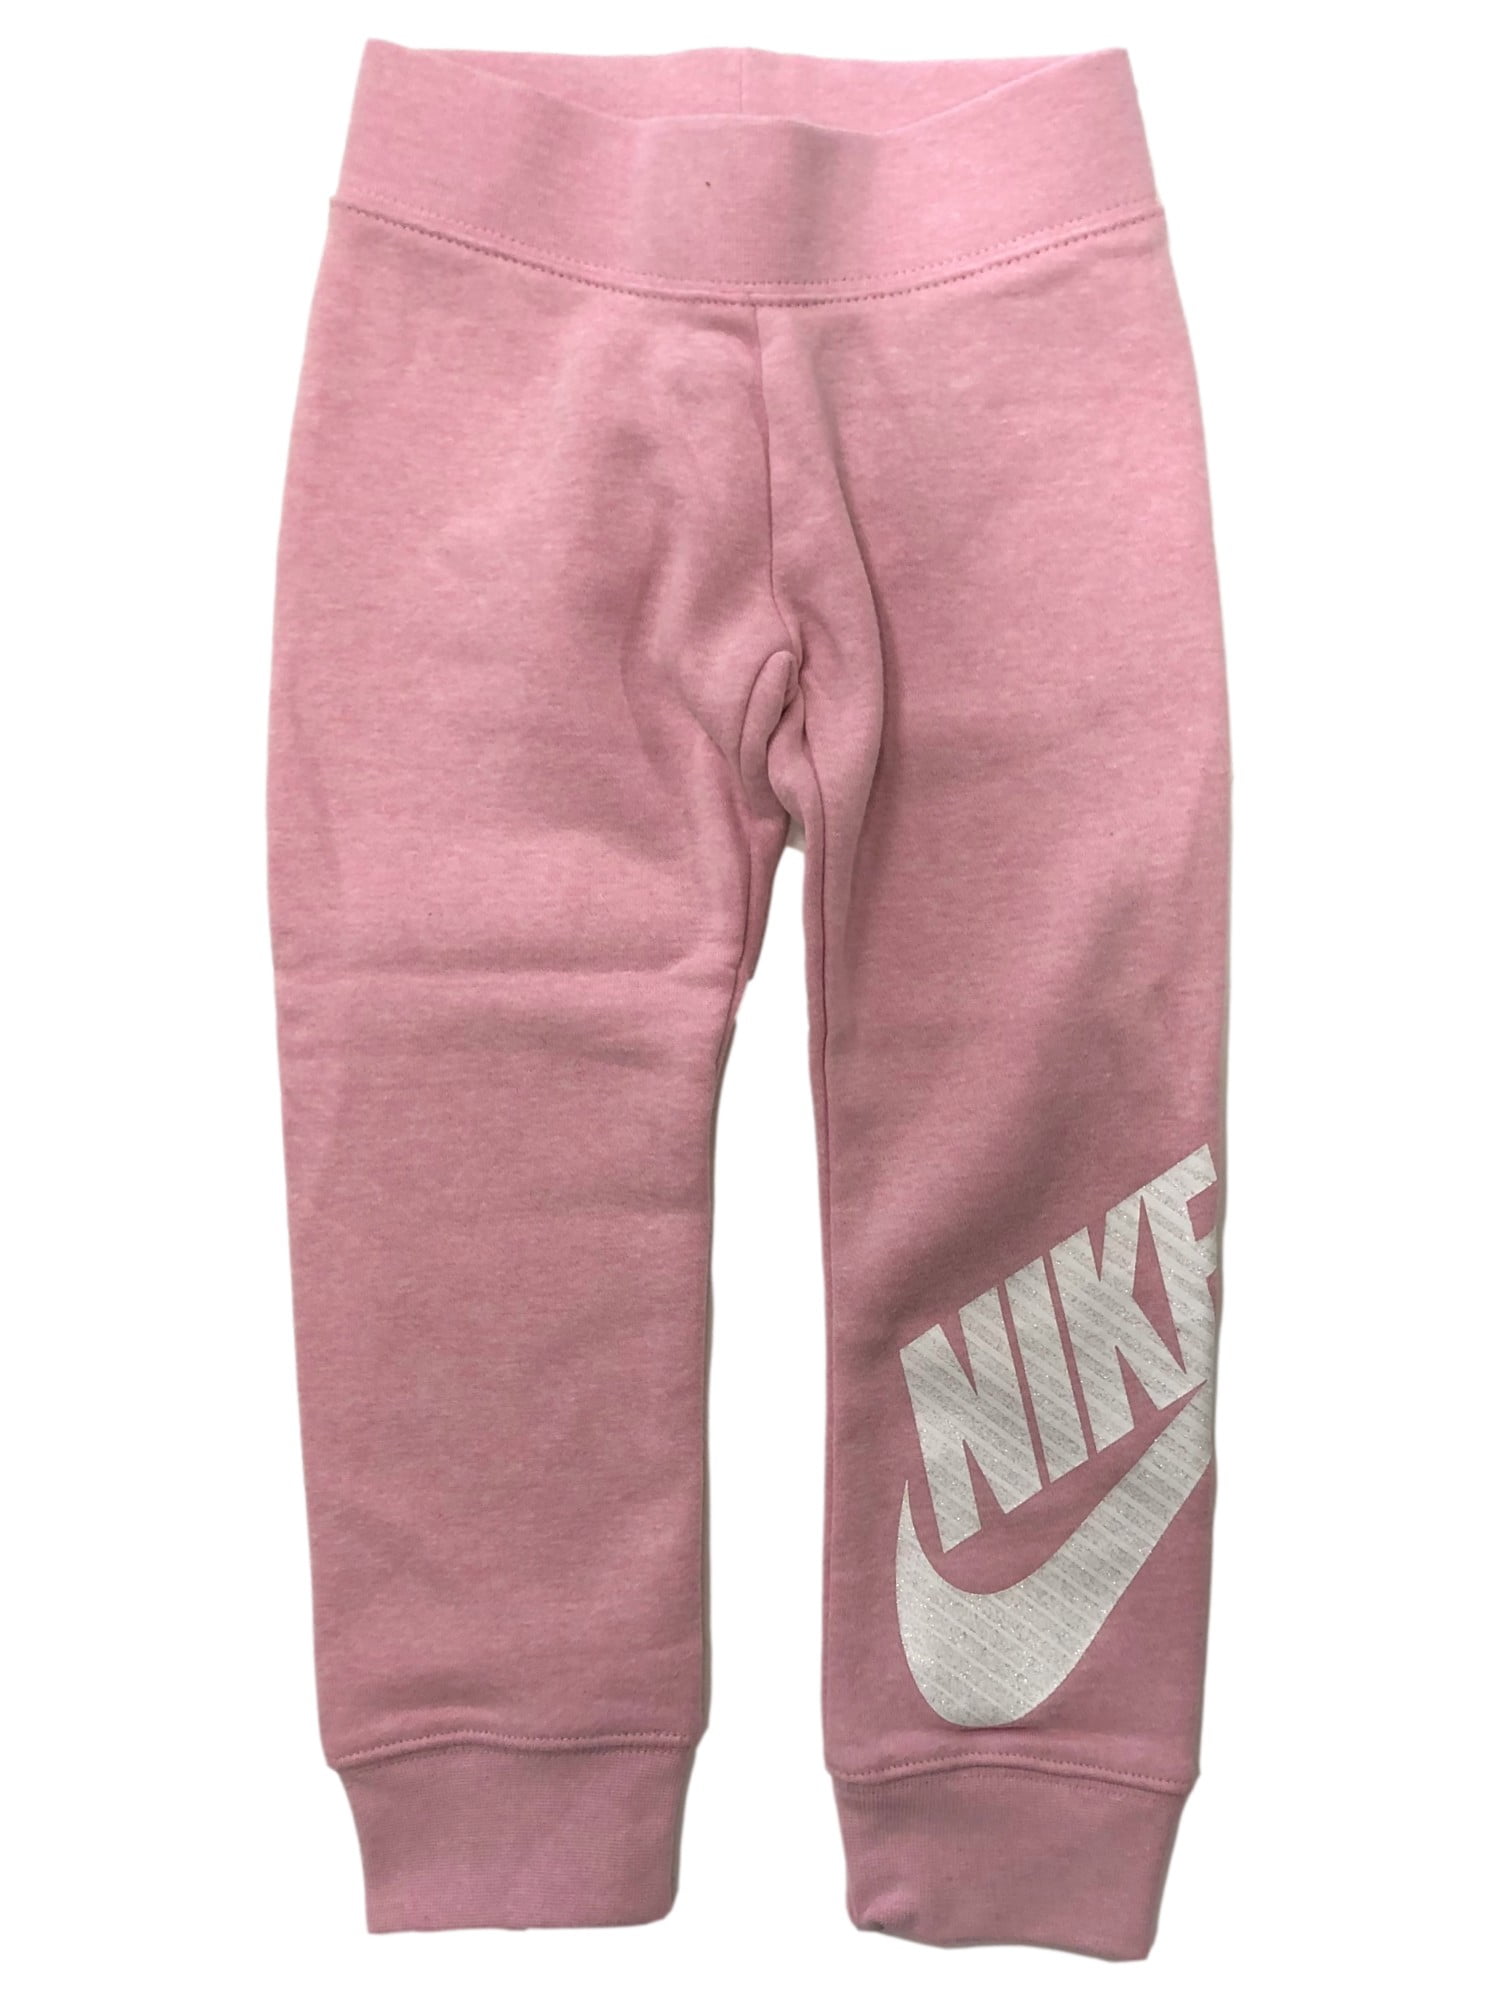 Nike Girls Pink Joggers Stretch Sweat Pants 4 Walmart.com